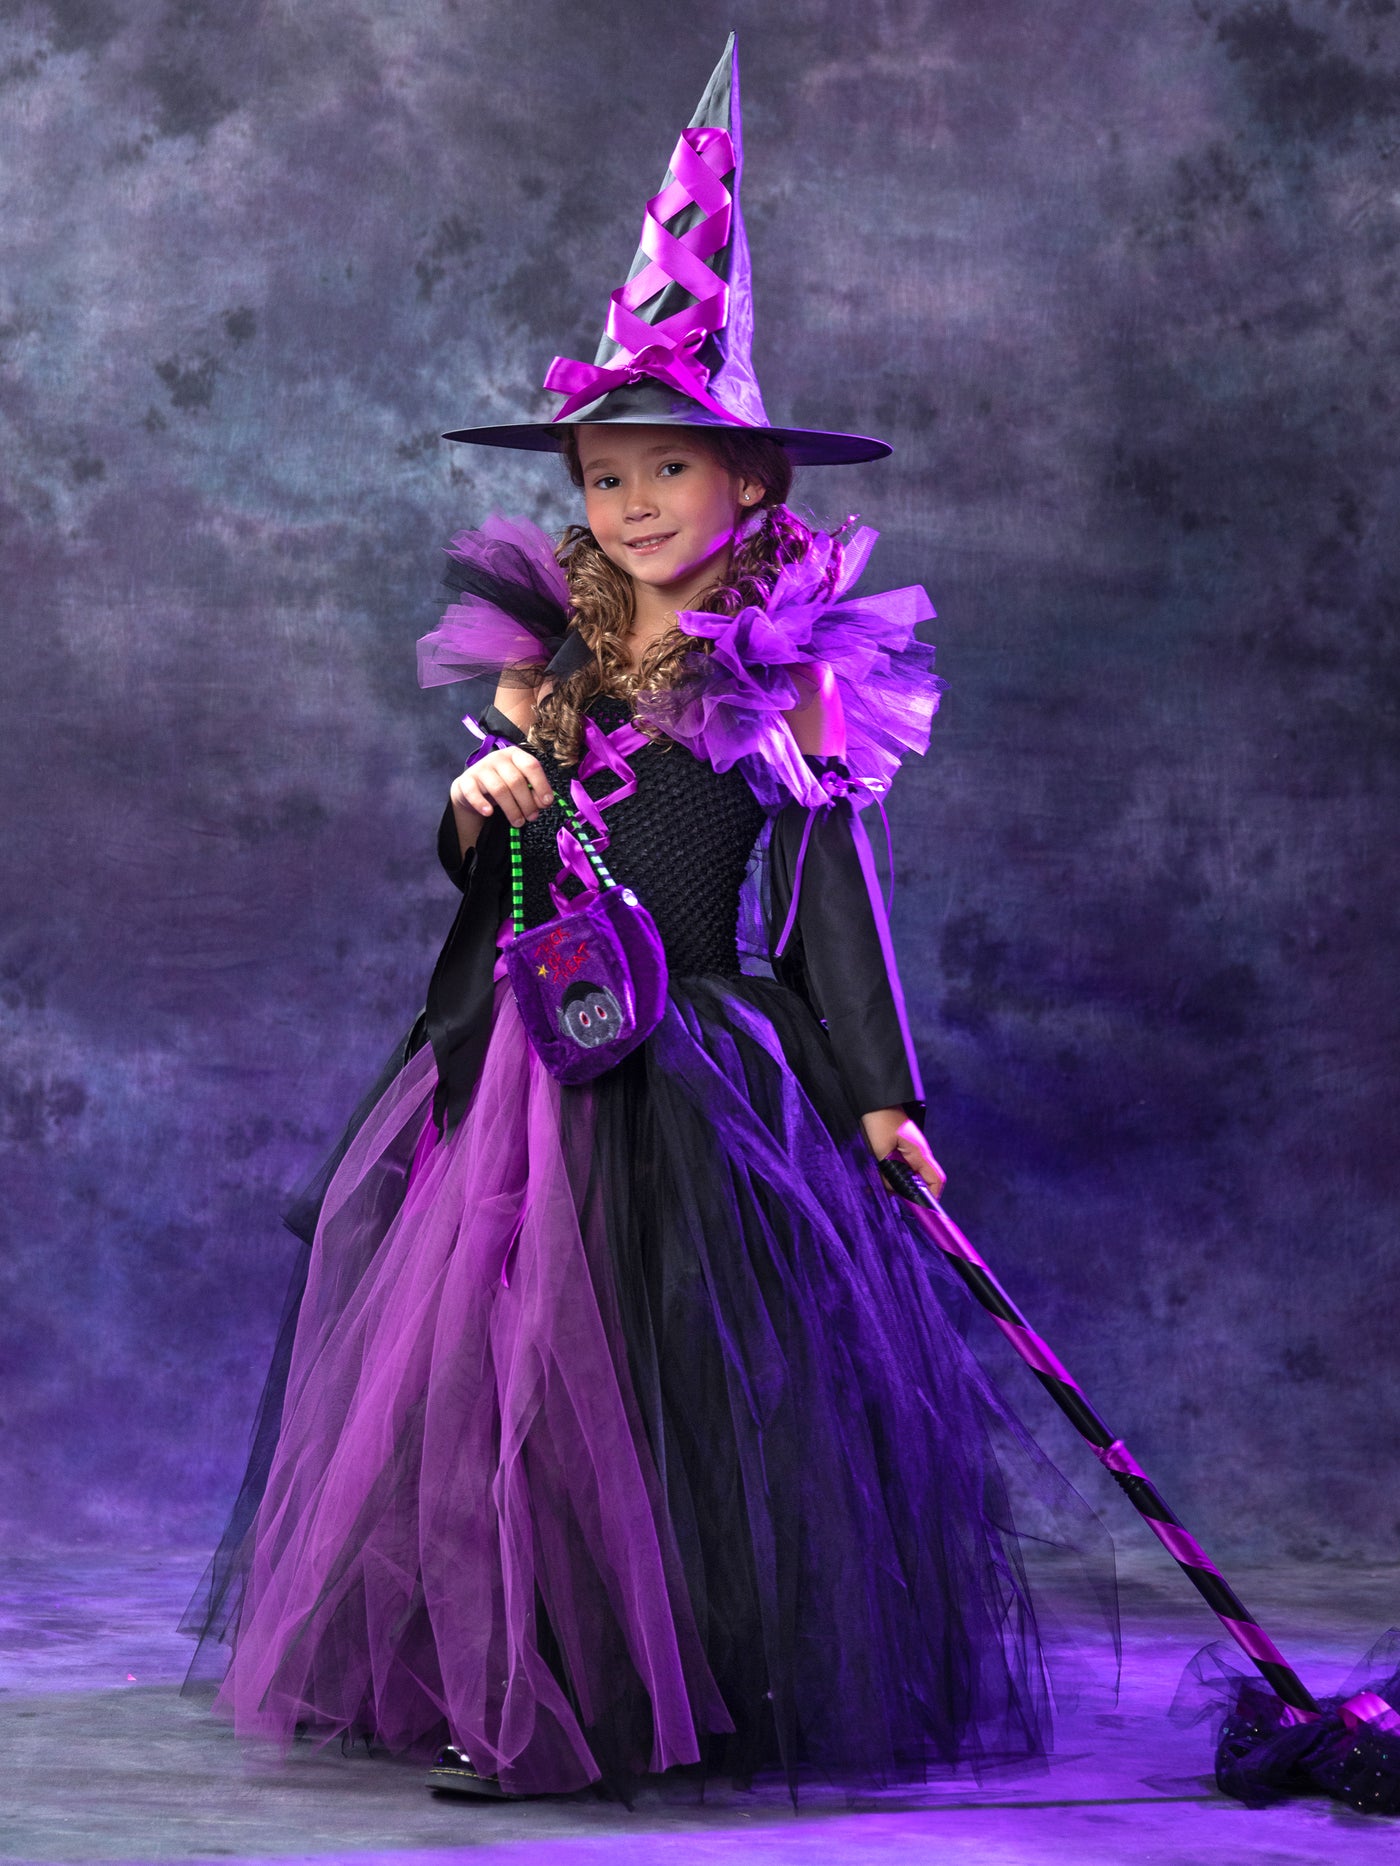 dress as a witch